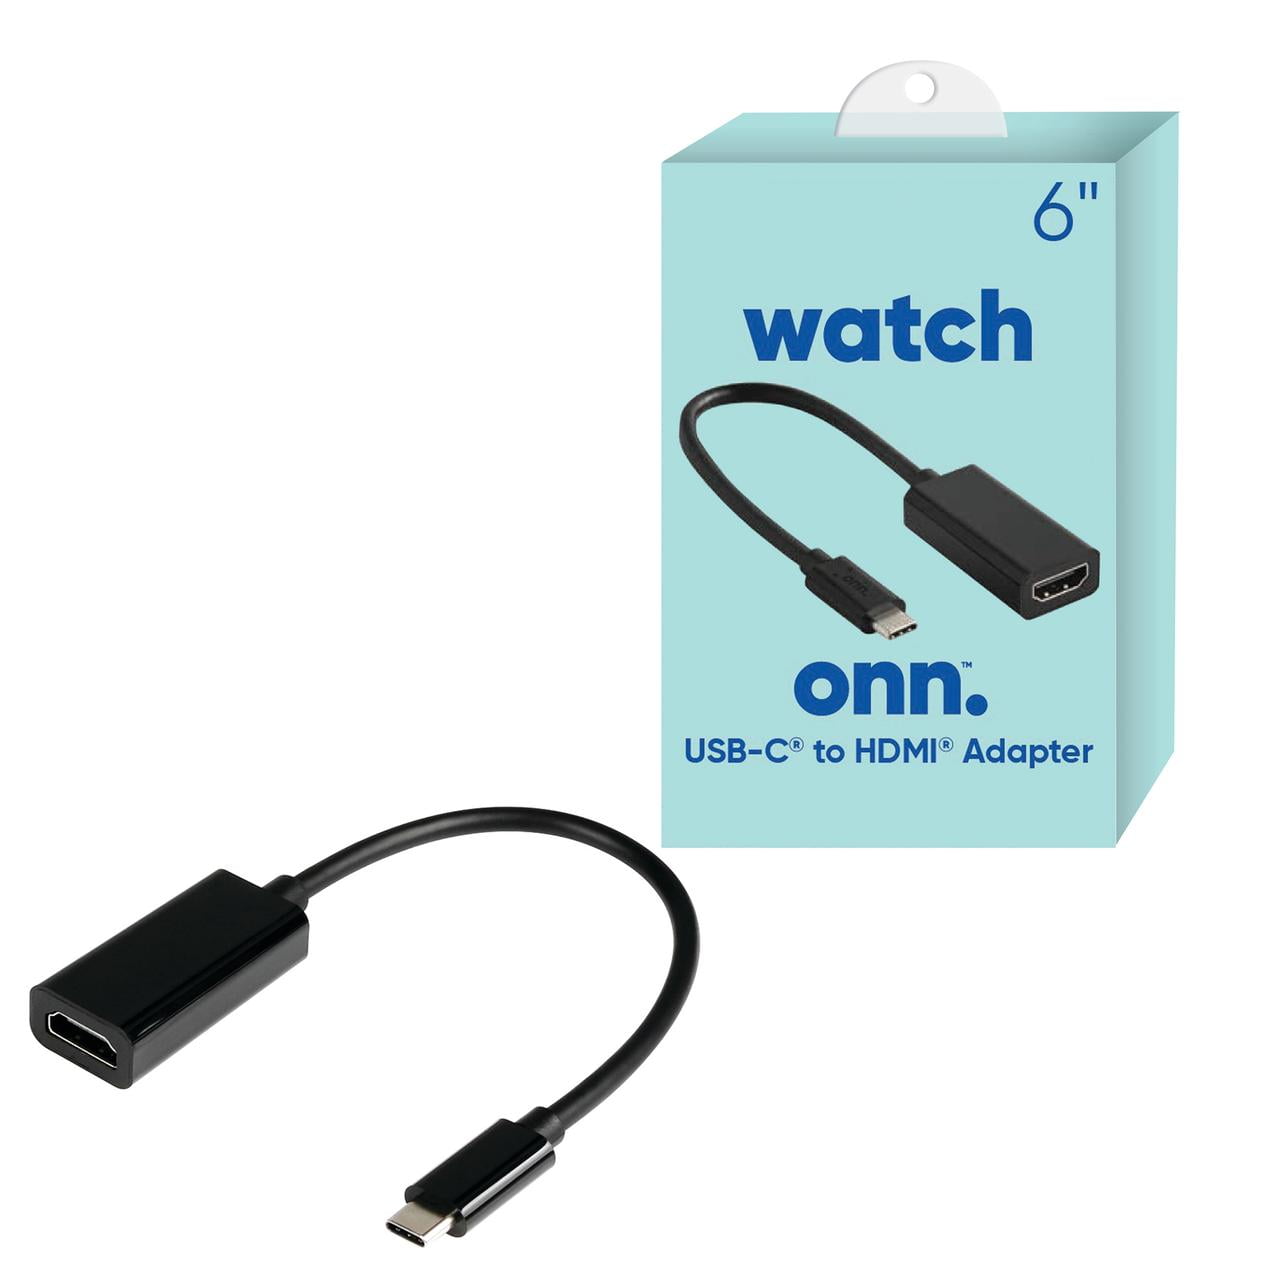 onn. 6" USB-C to HDMI - Walmart.com